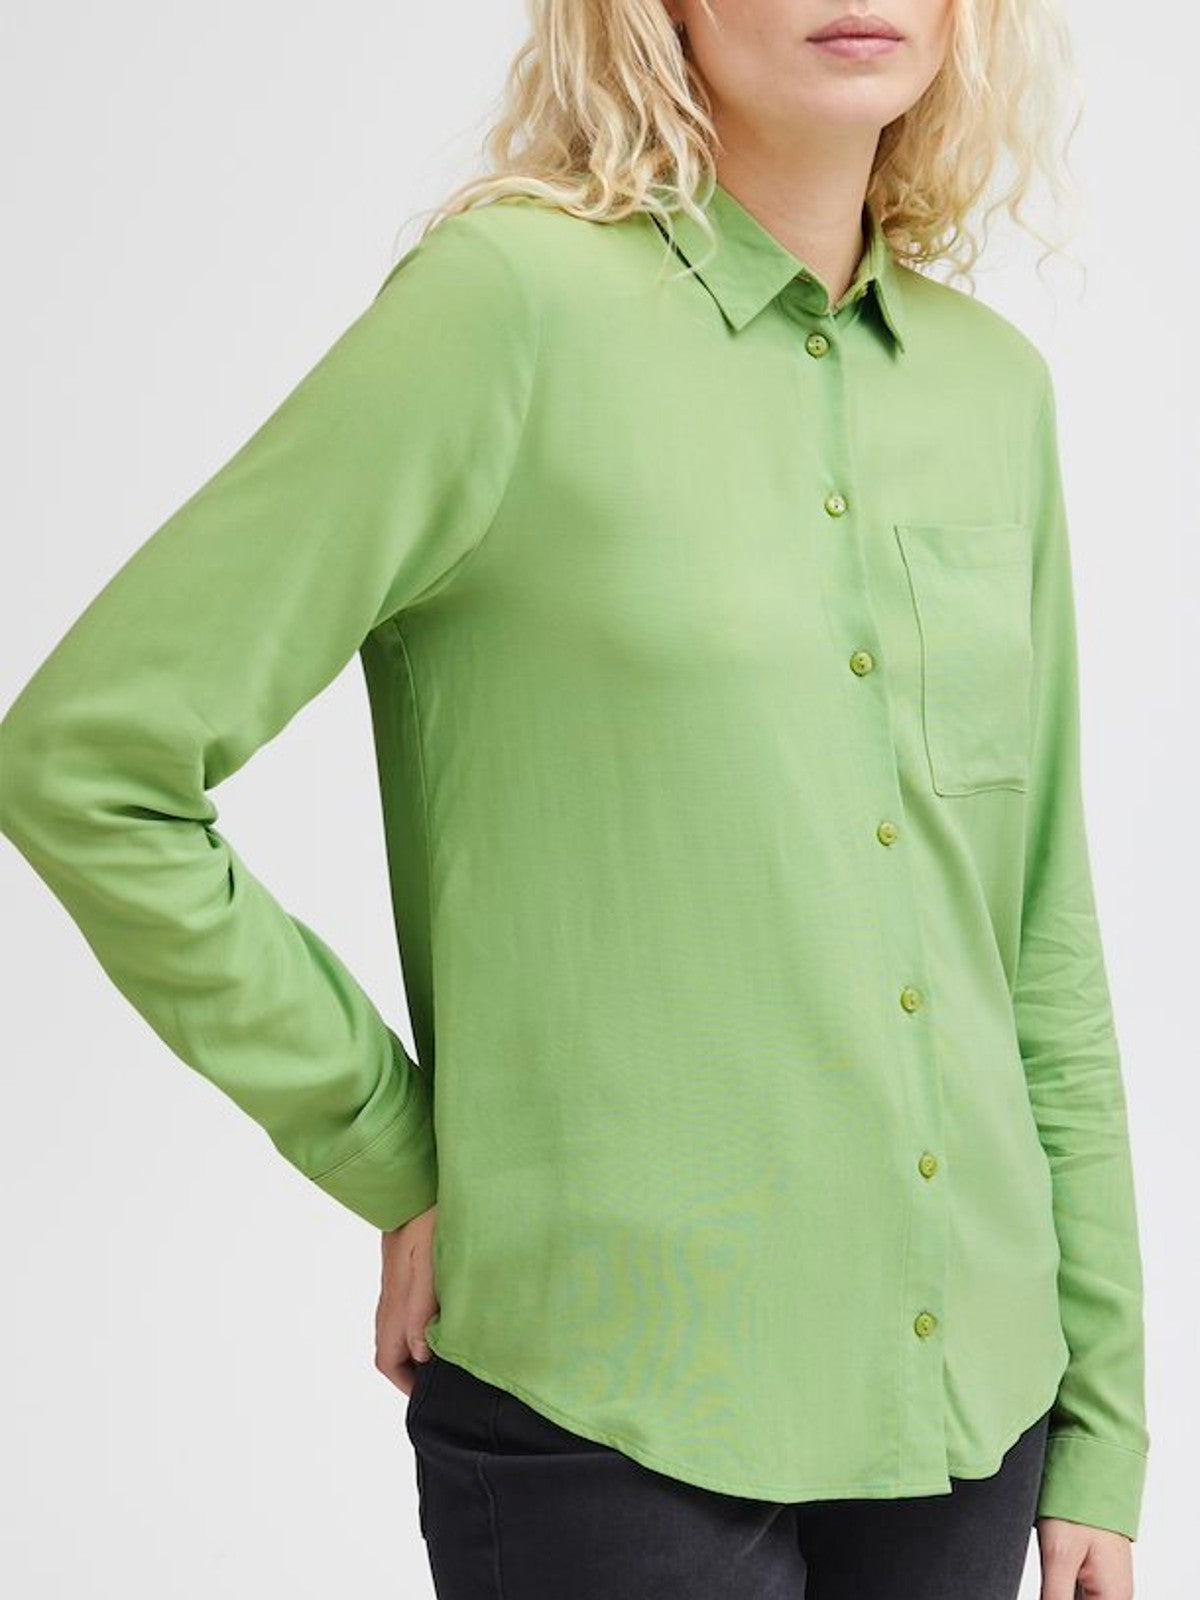 Main Green Shirt